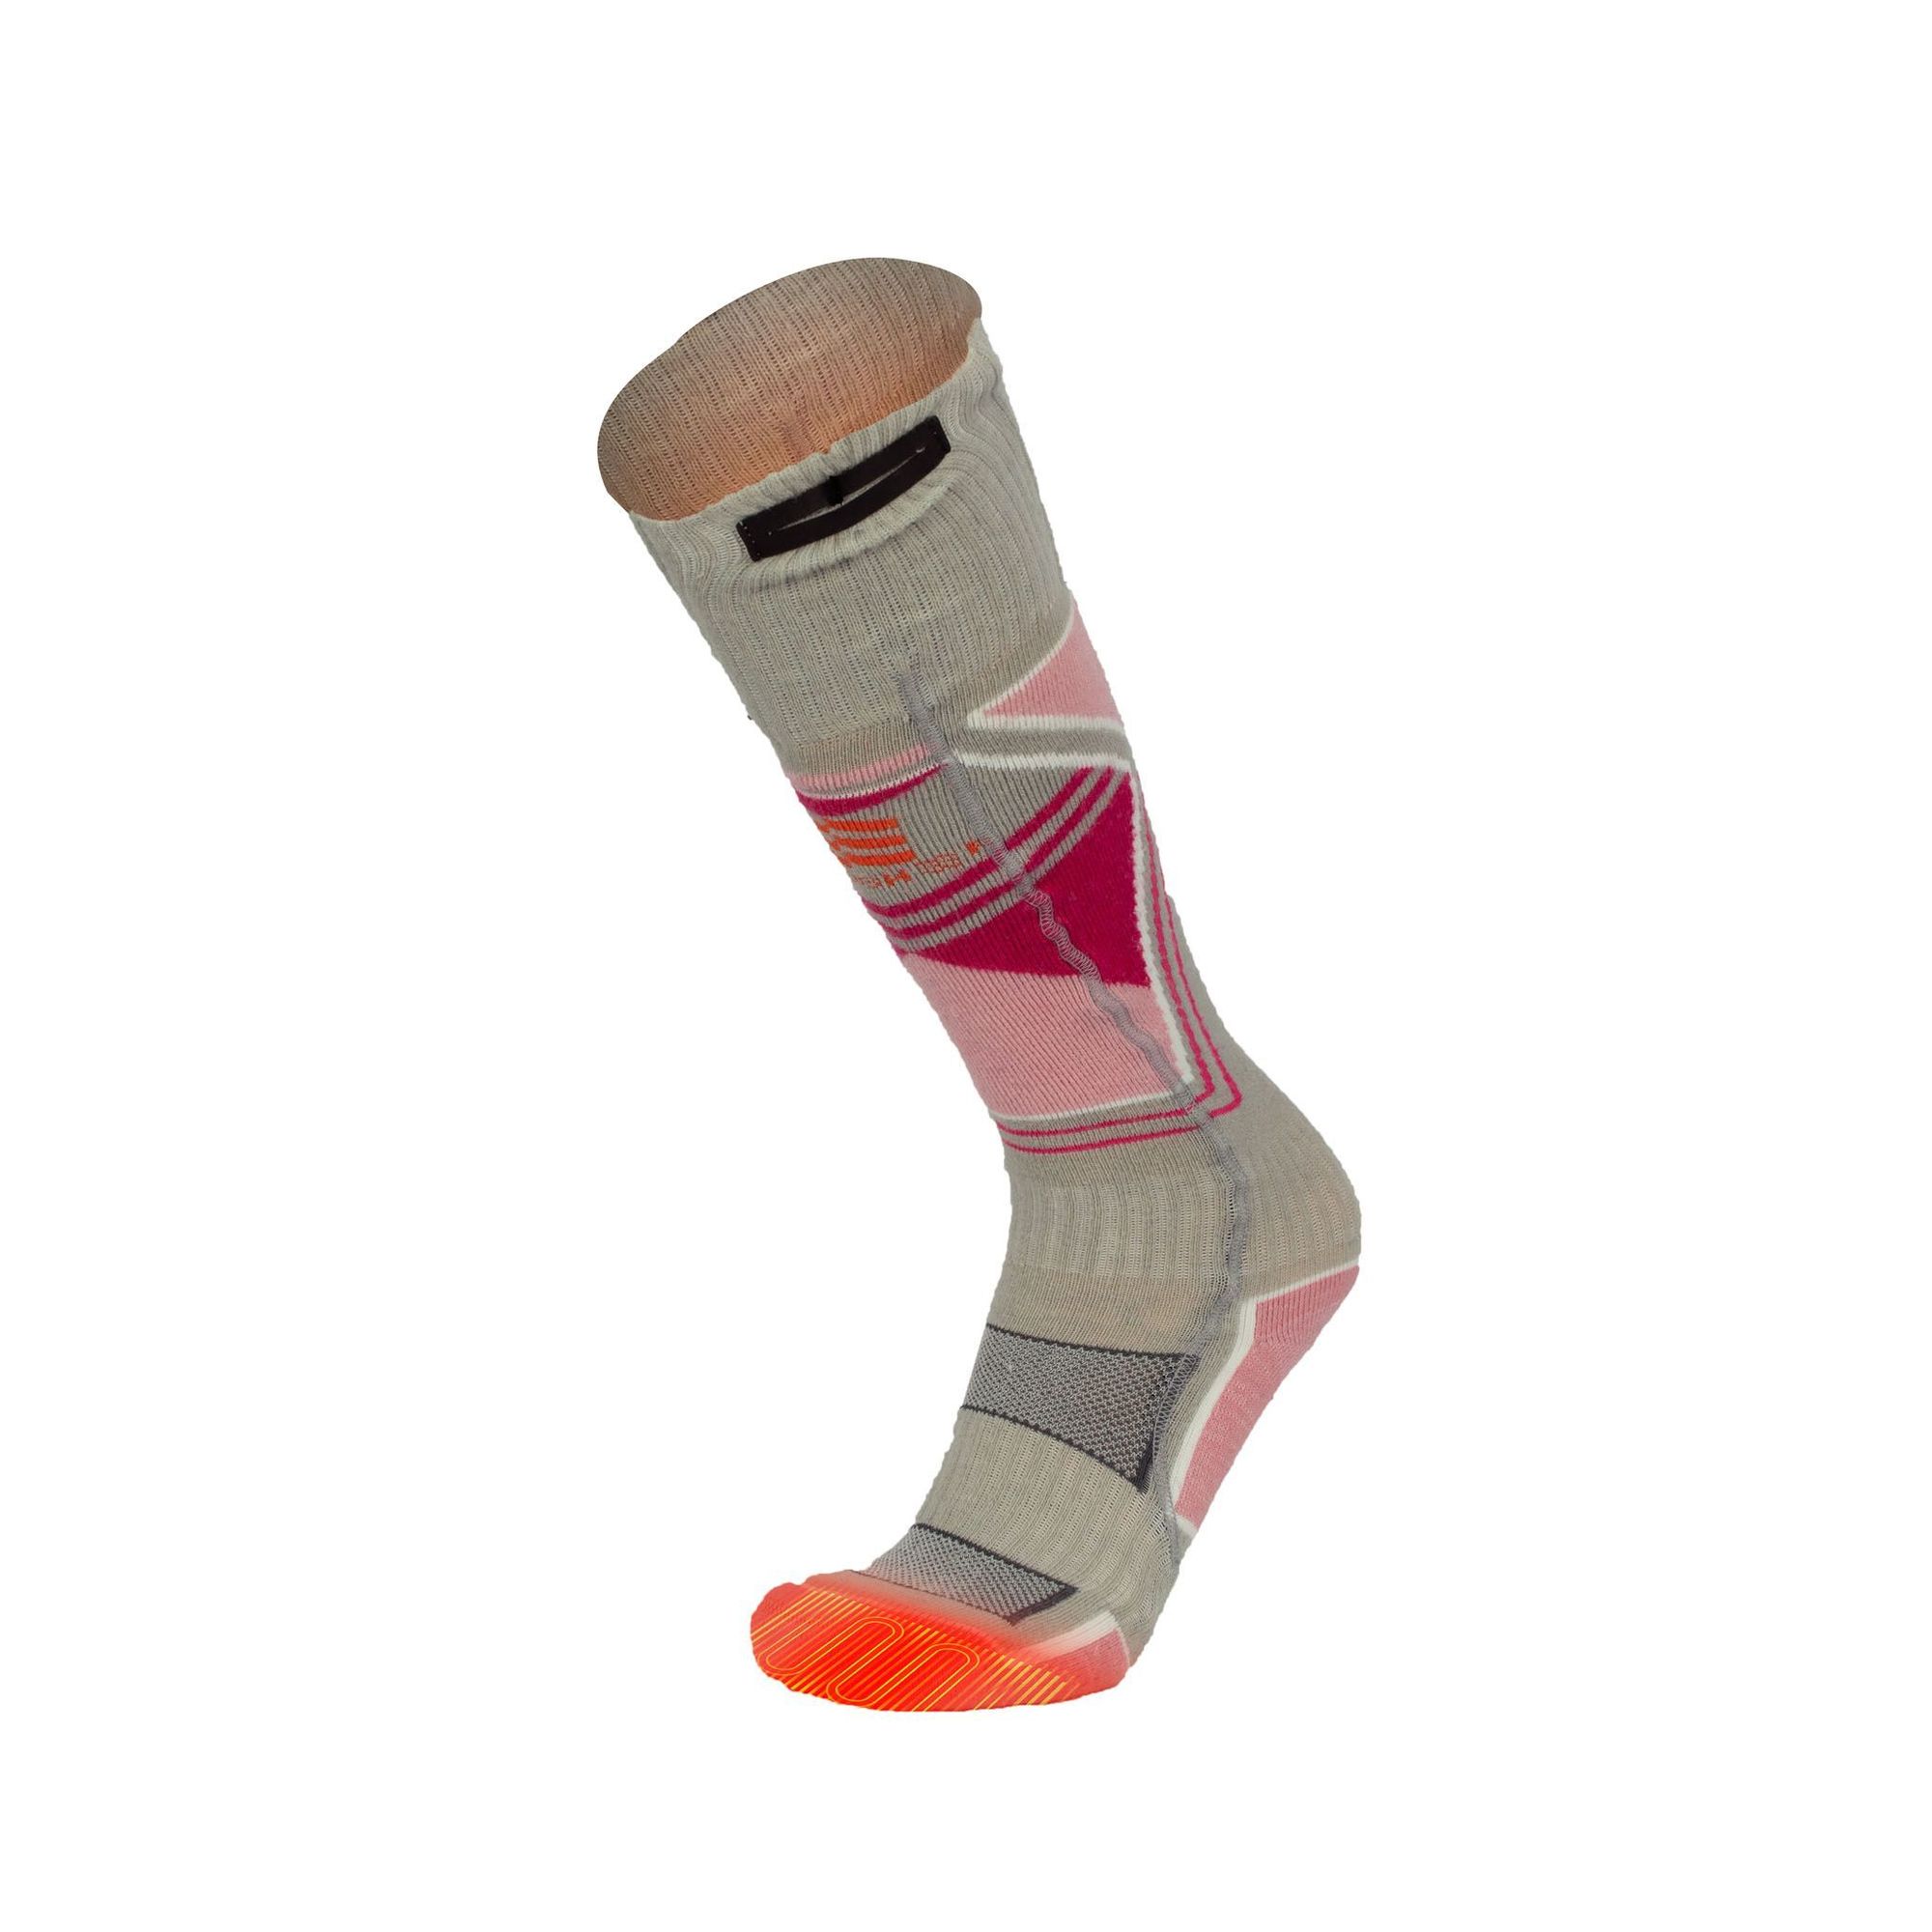 Fieldsheer, Premium Merino Heated Socks | Women's | PNK | LG, Size L, Pairs (qty.) 1 Color Pink, Model MWWS07010421